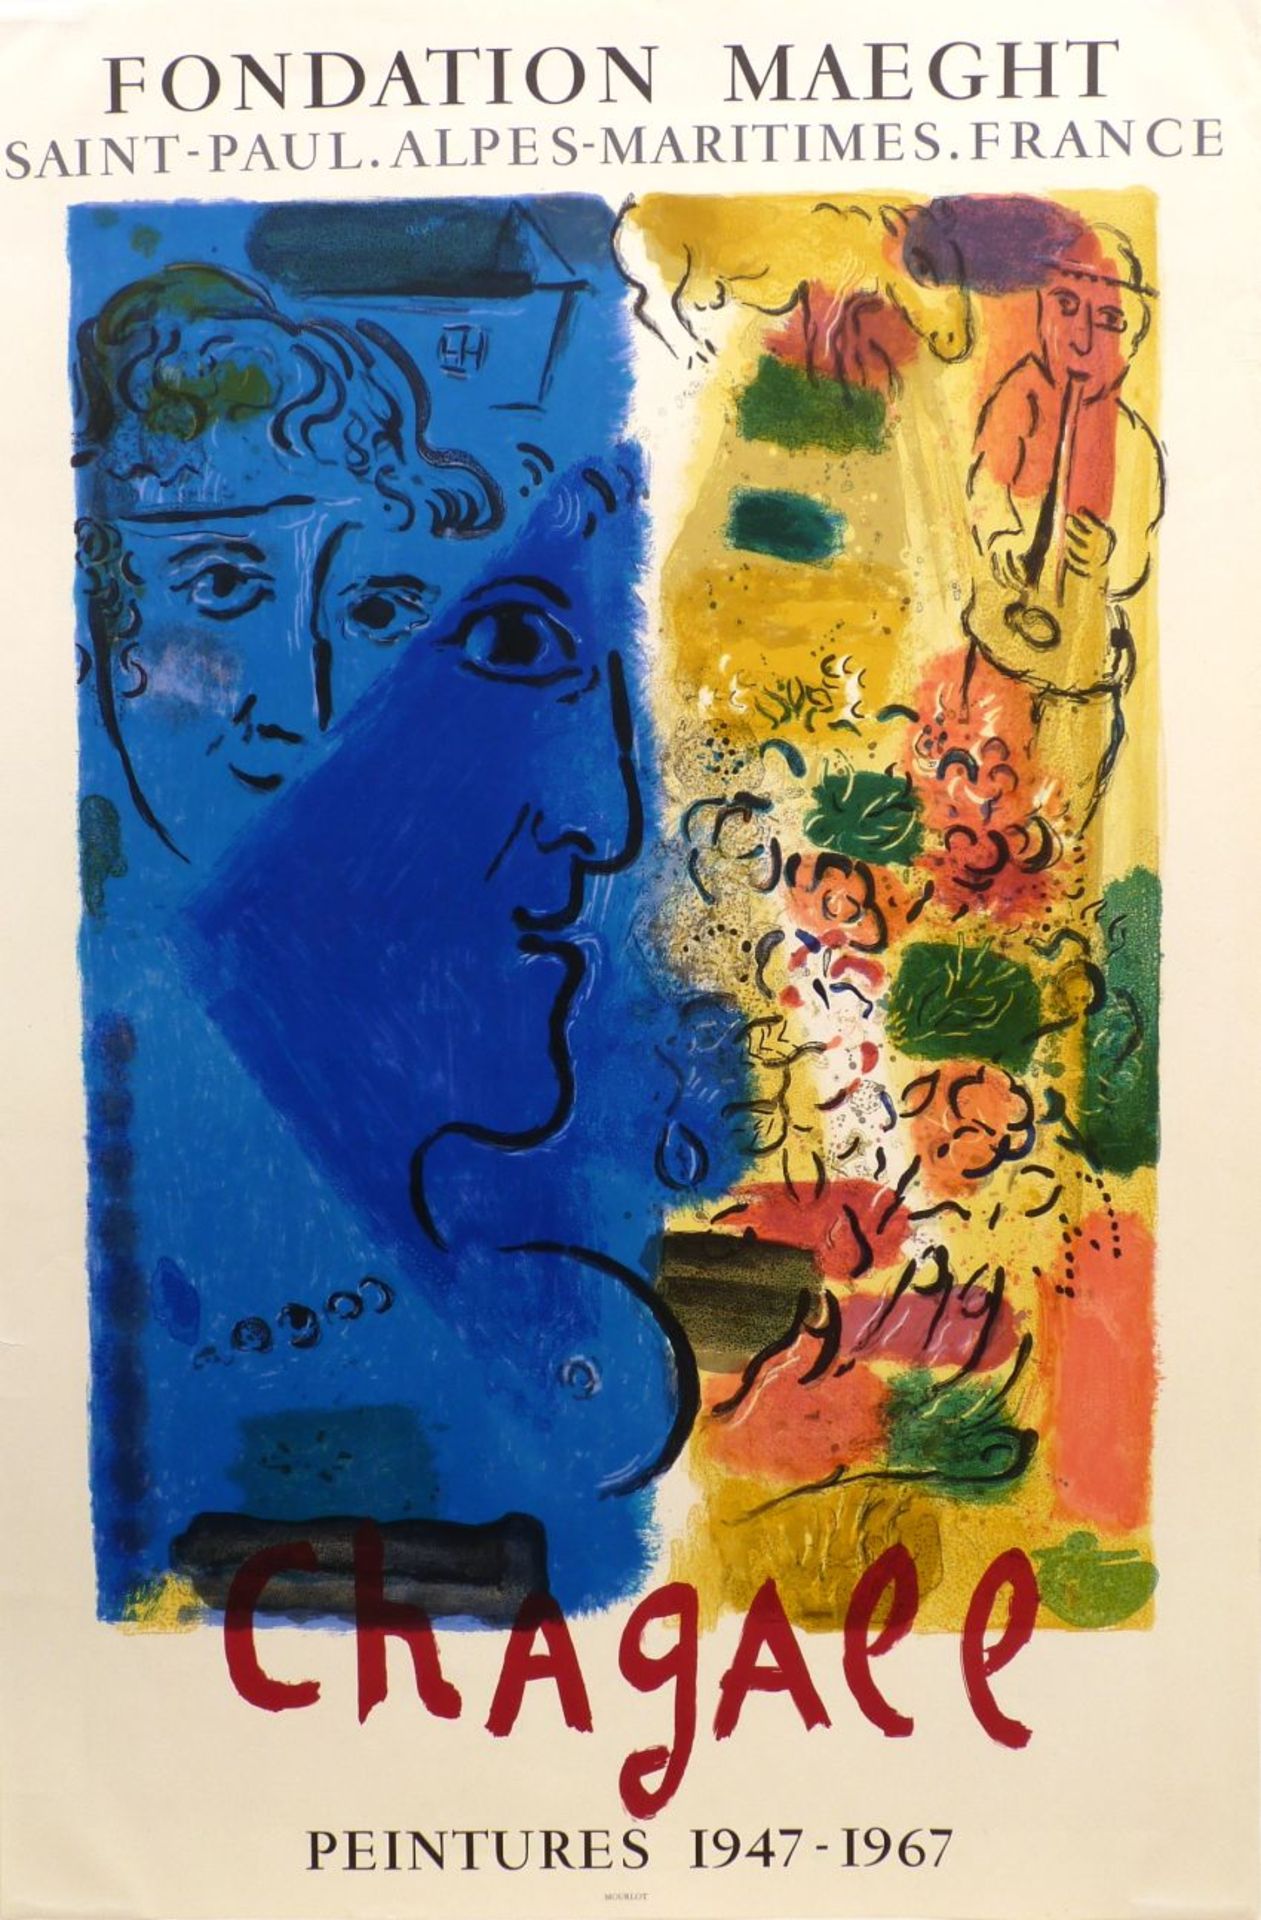 CHAGALL, MARC: "Peintures 1947-1967", o.J.